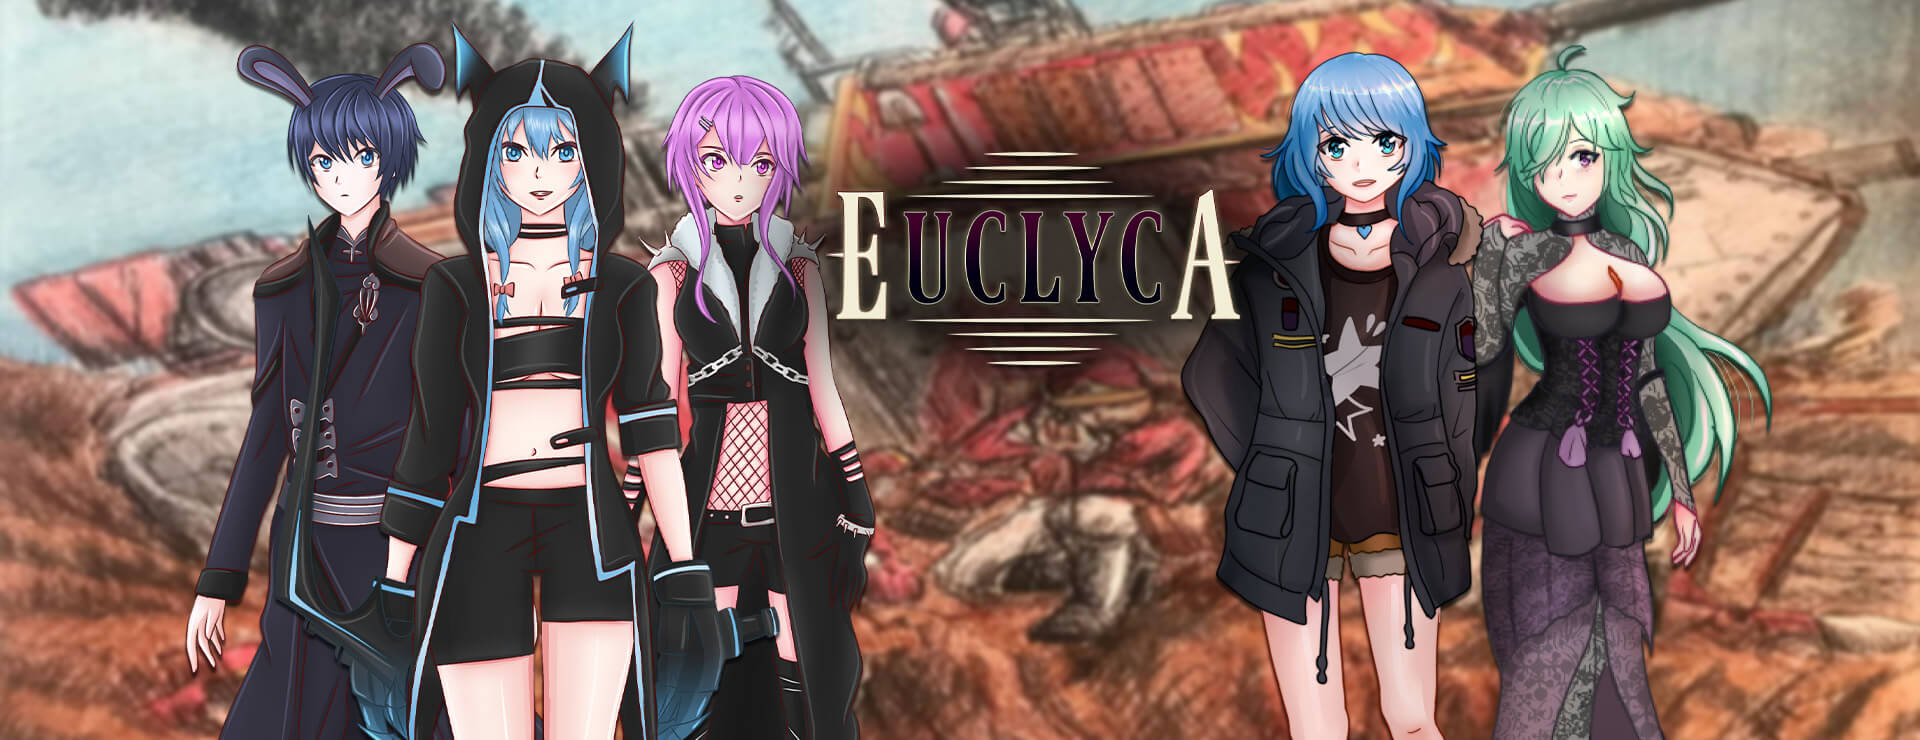 Euclyca - 角色扮演 遊戲